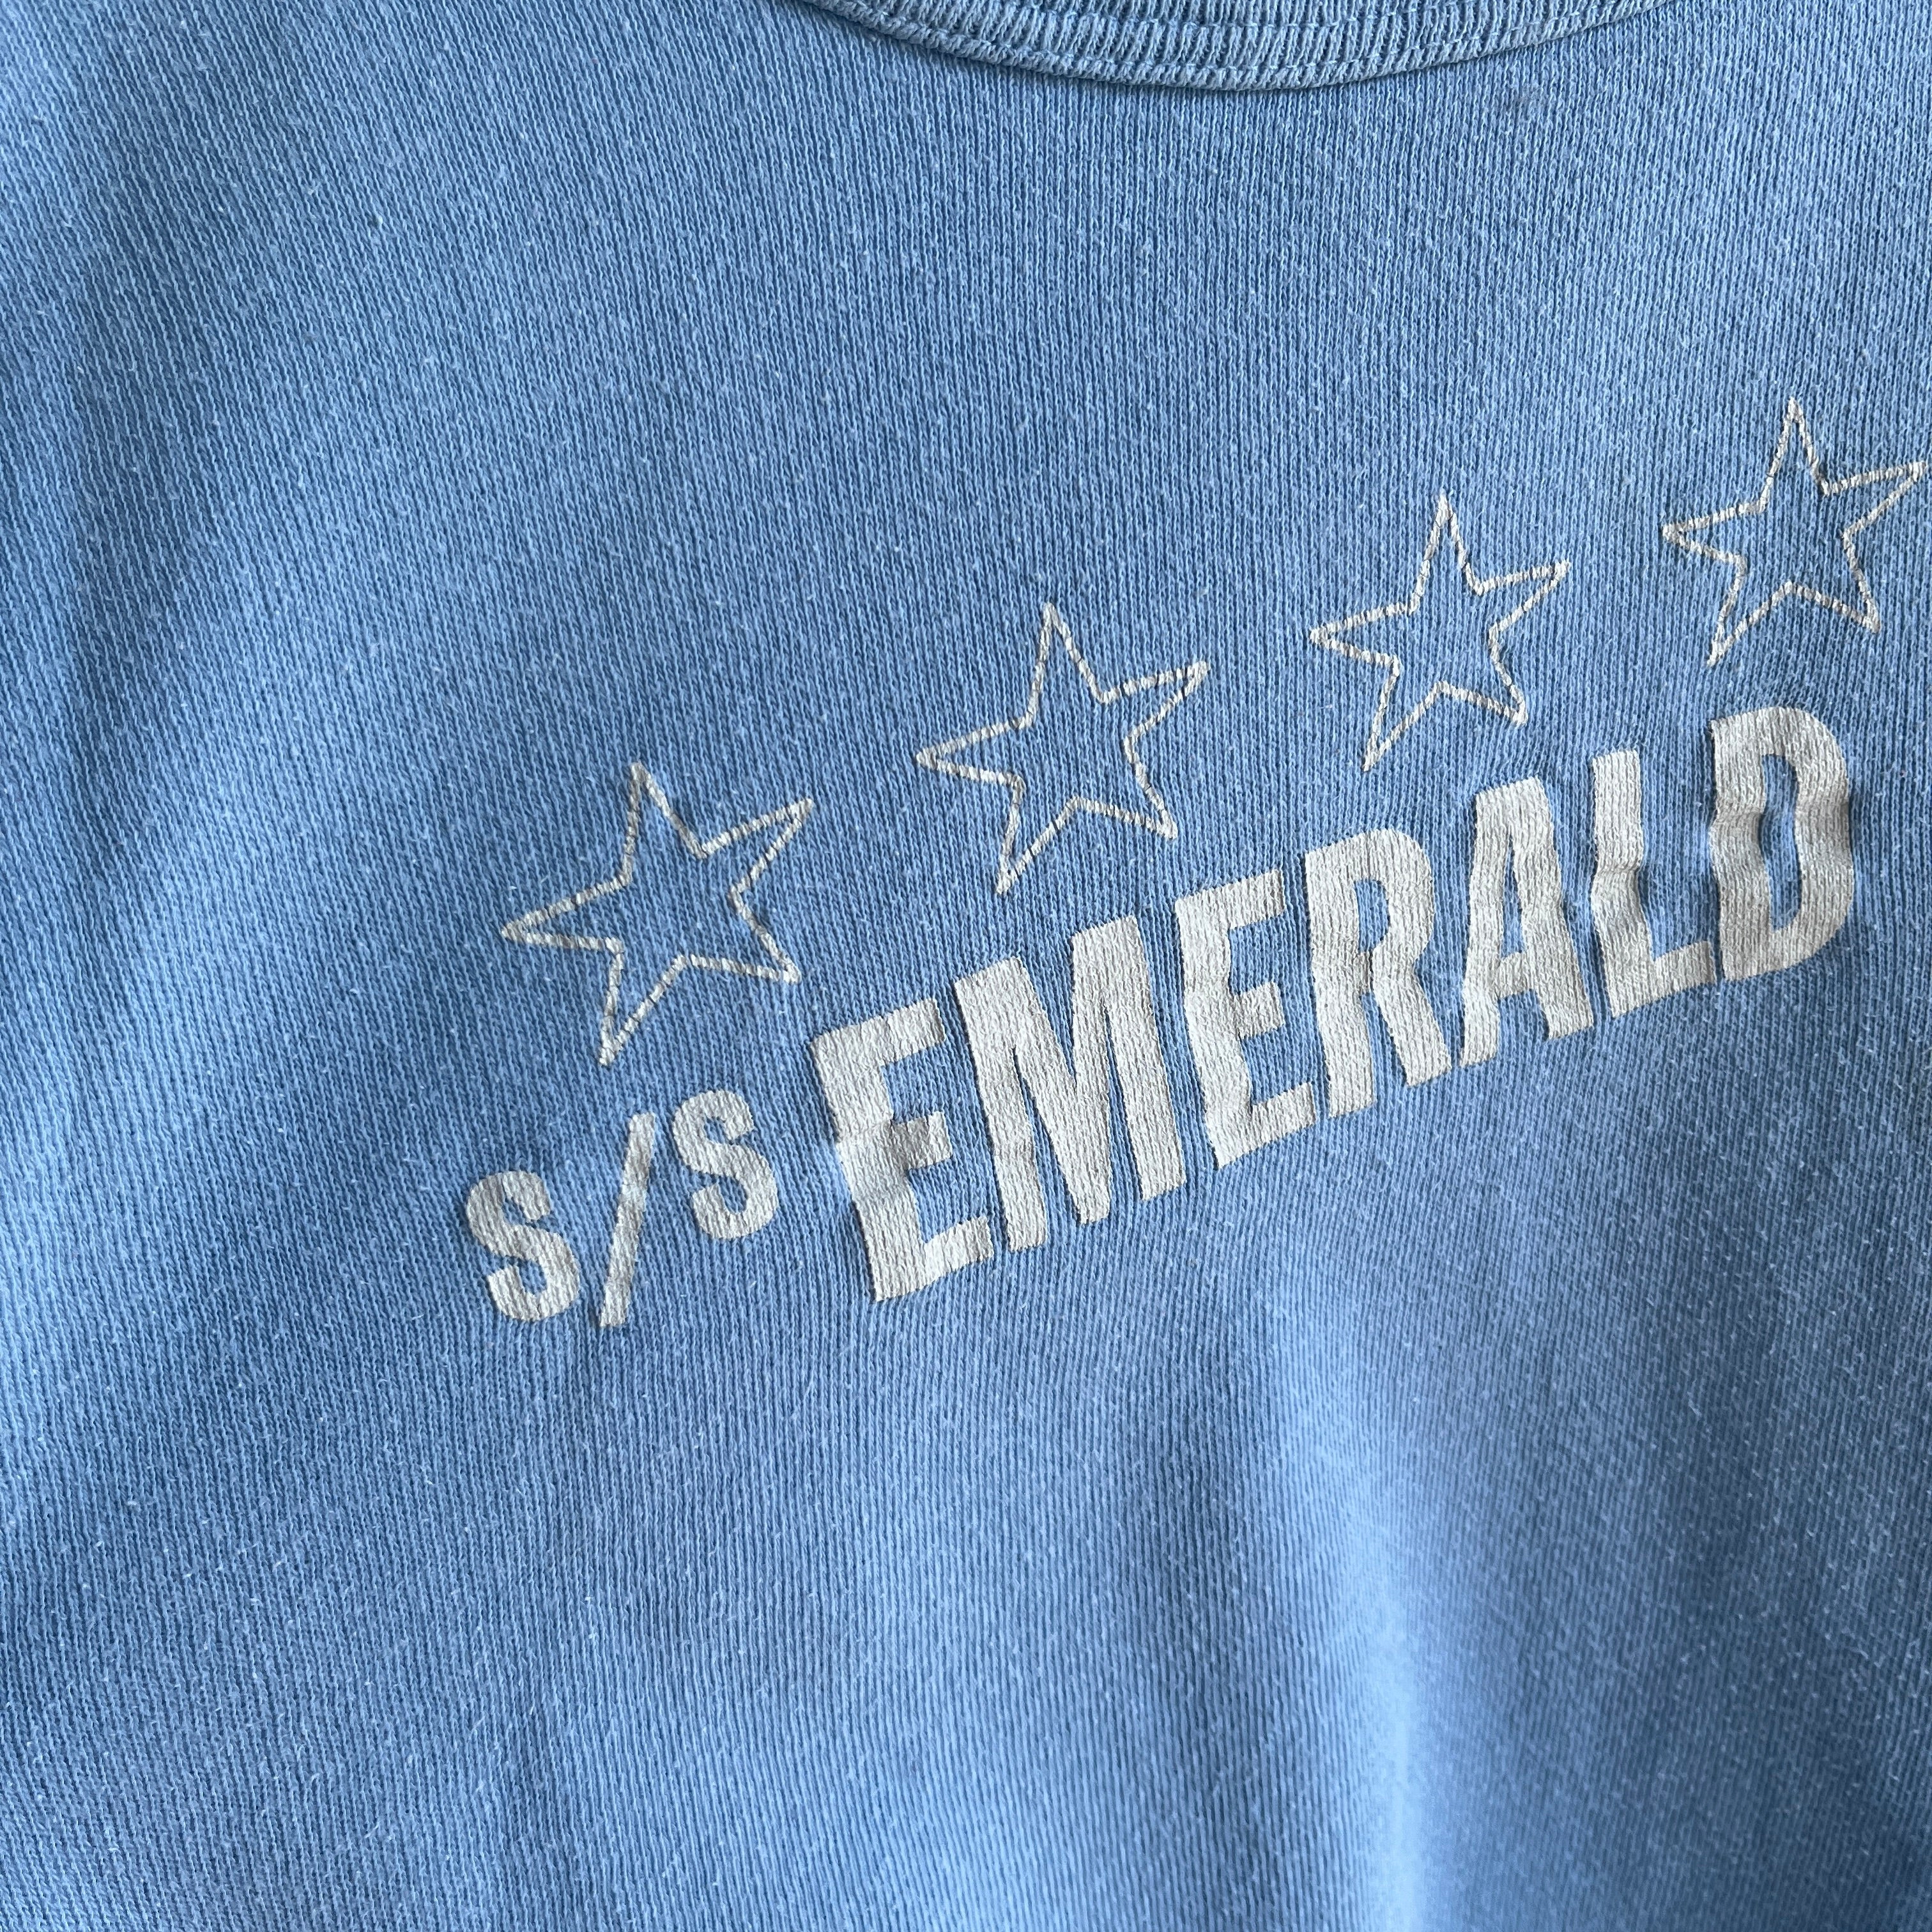 1950/60s S/S Emerald Seas Cruise Tourist Sweatshirt - WOW